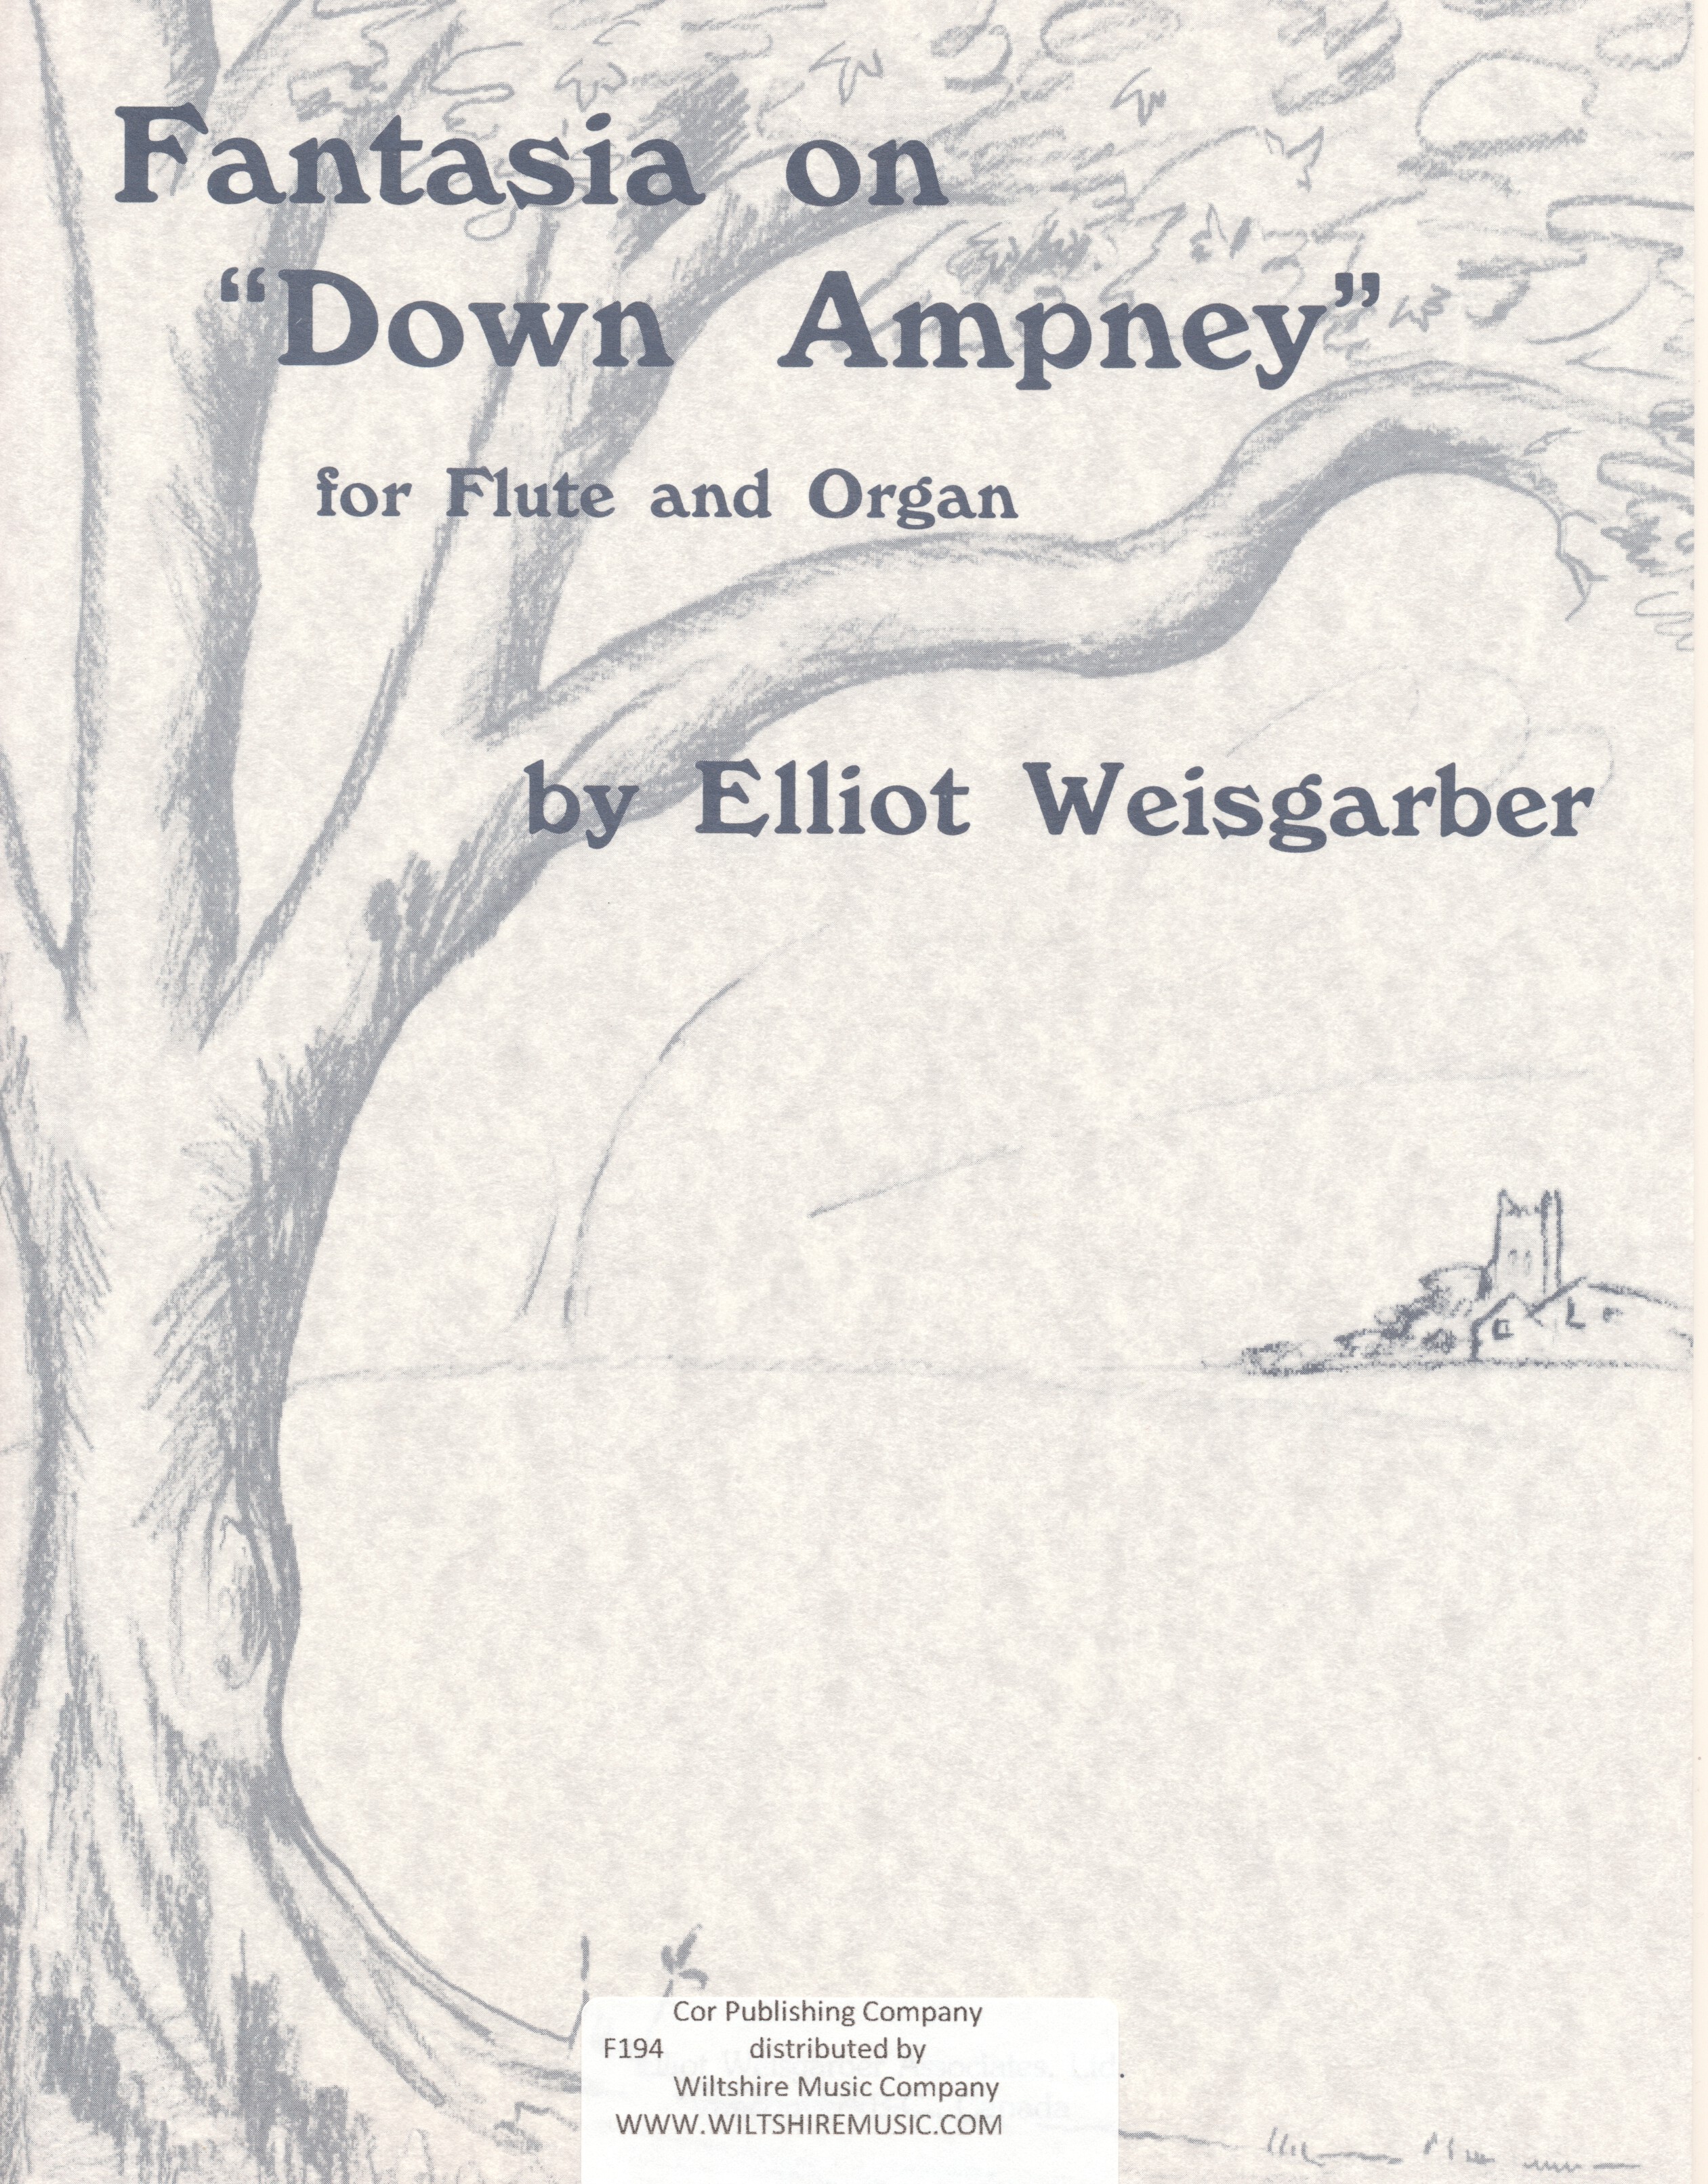 Fantasia on "Down Ampney", Elliot Weisgarber